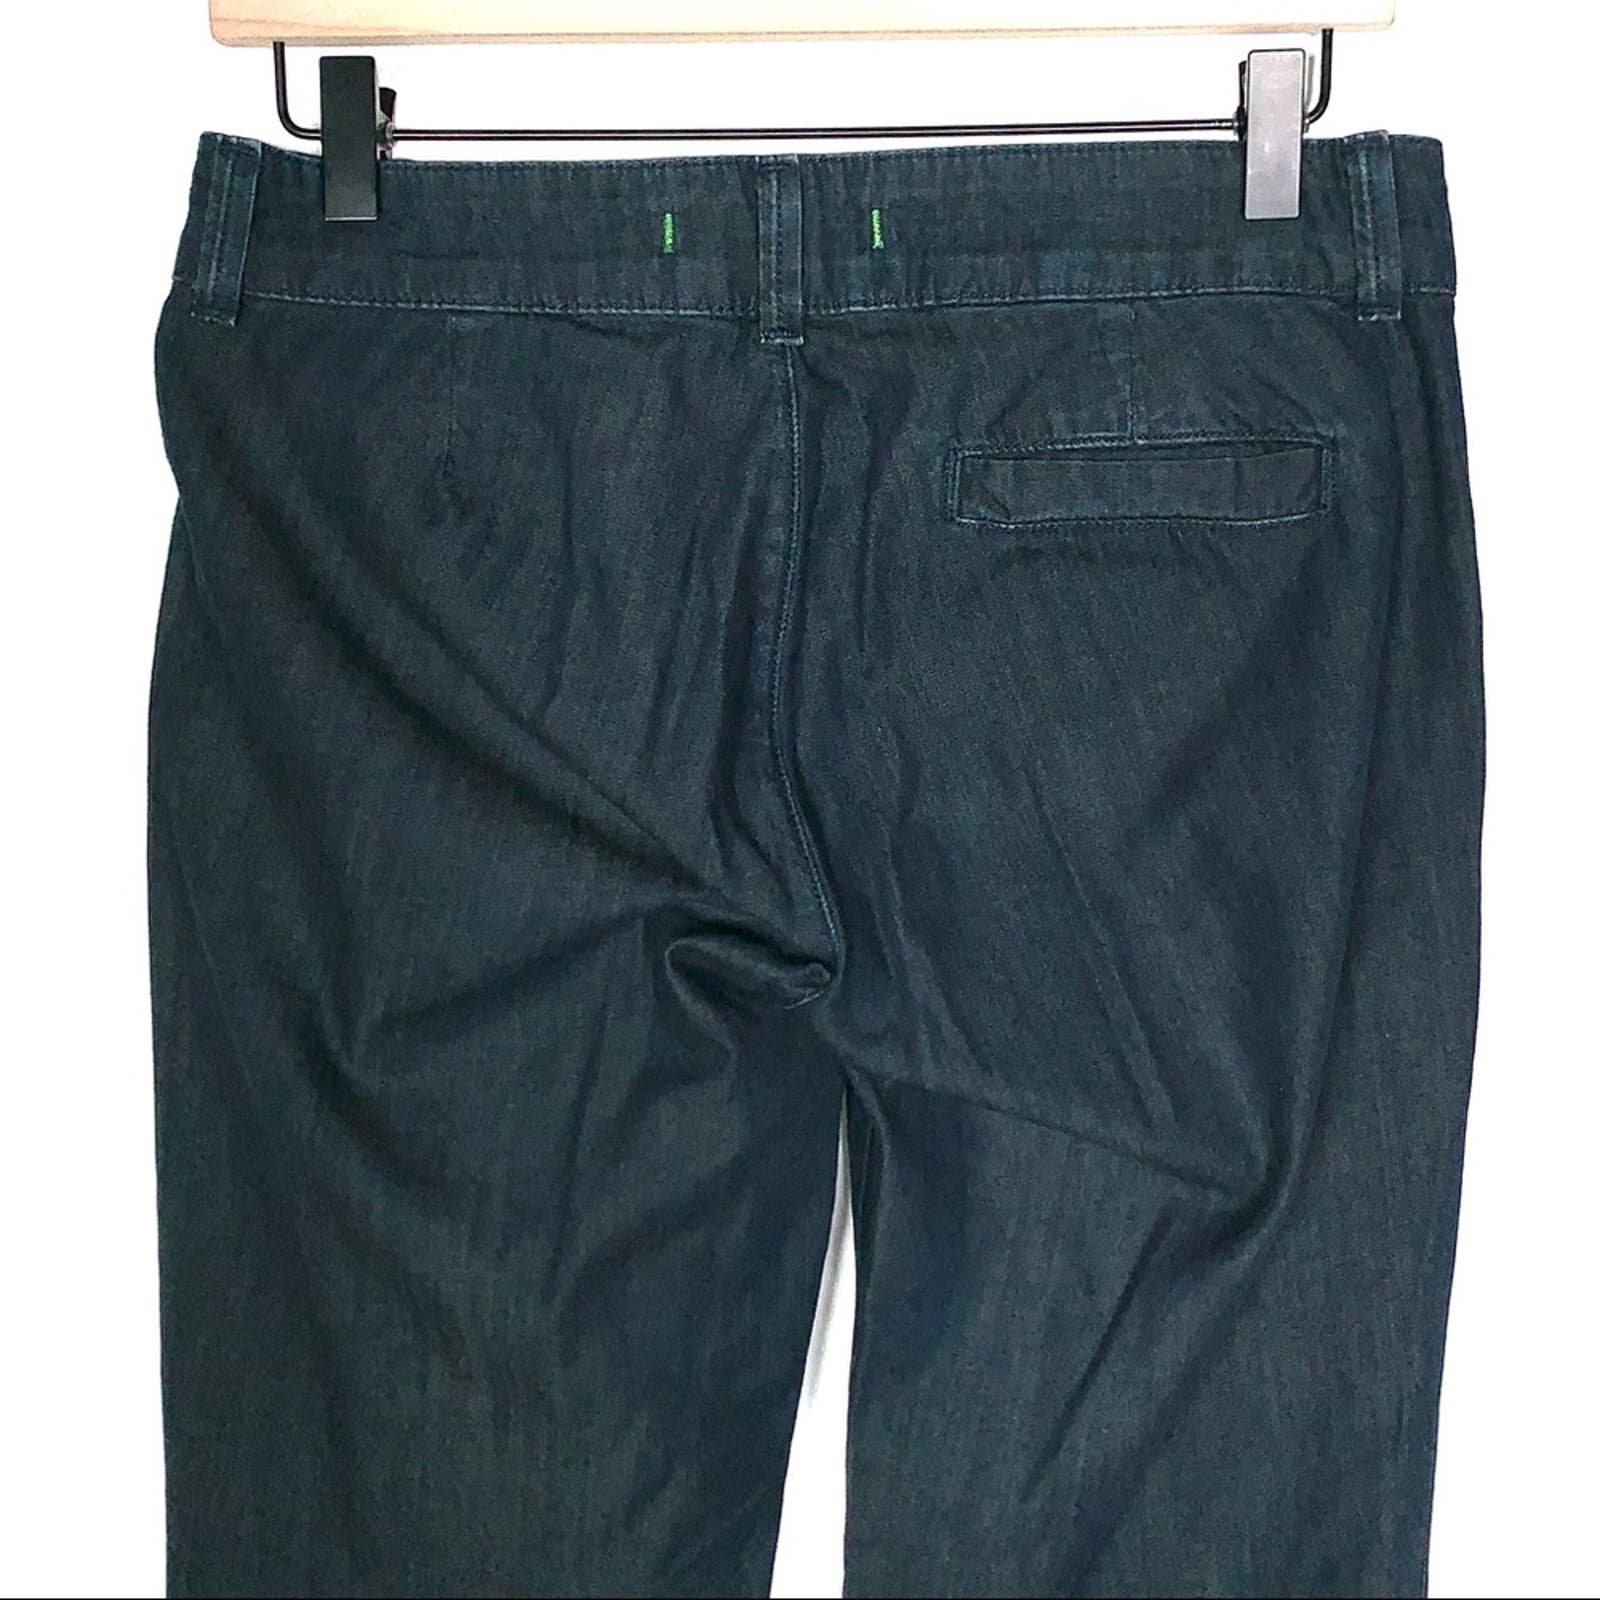 Buy J Brand dark wash mid rise bell bottom trouser jeans size 26 g3KMc8PwL just buy it